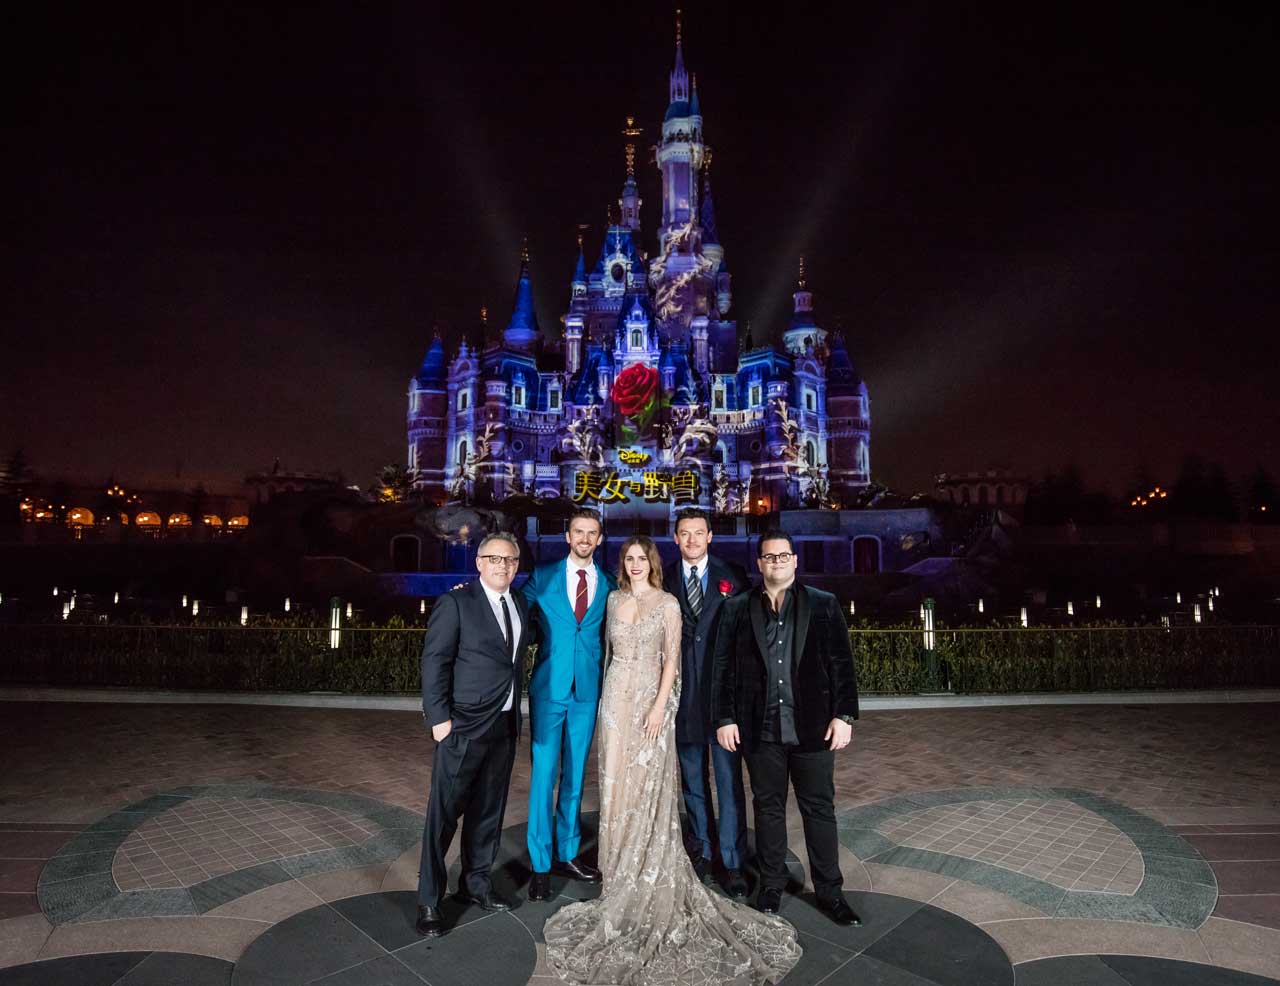 Bill Condon, Dan Stevens, Emma Watson, Luke Evans and Josh Gad at the Shanghai Disney Resort for Beauty and the Beast.